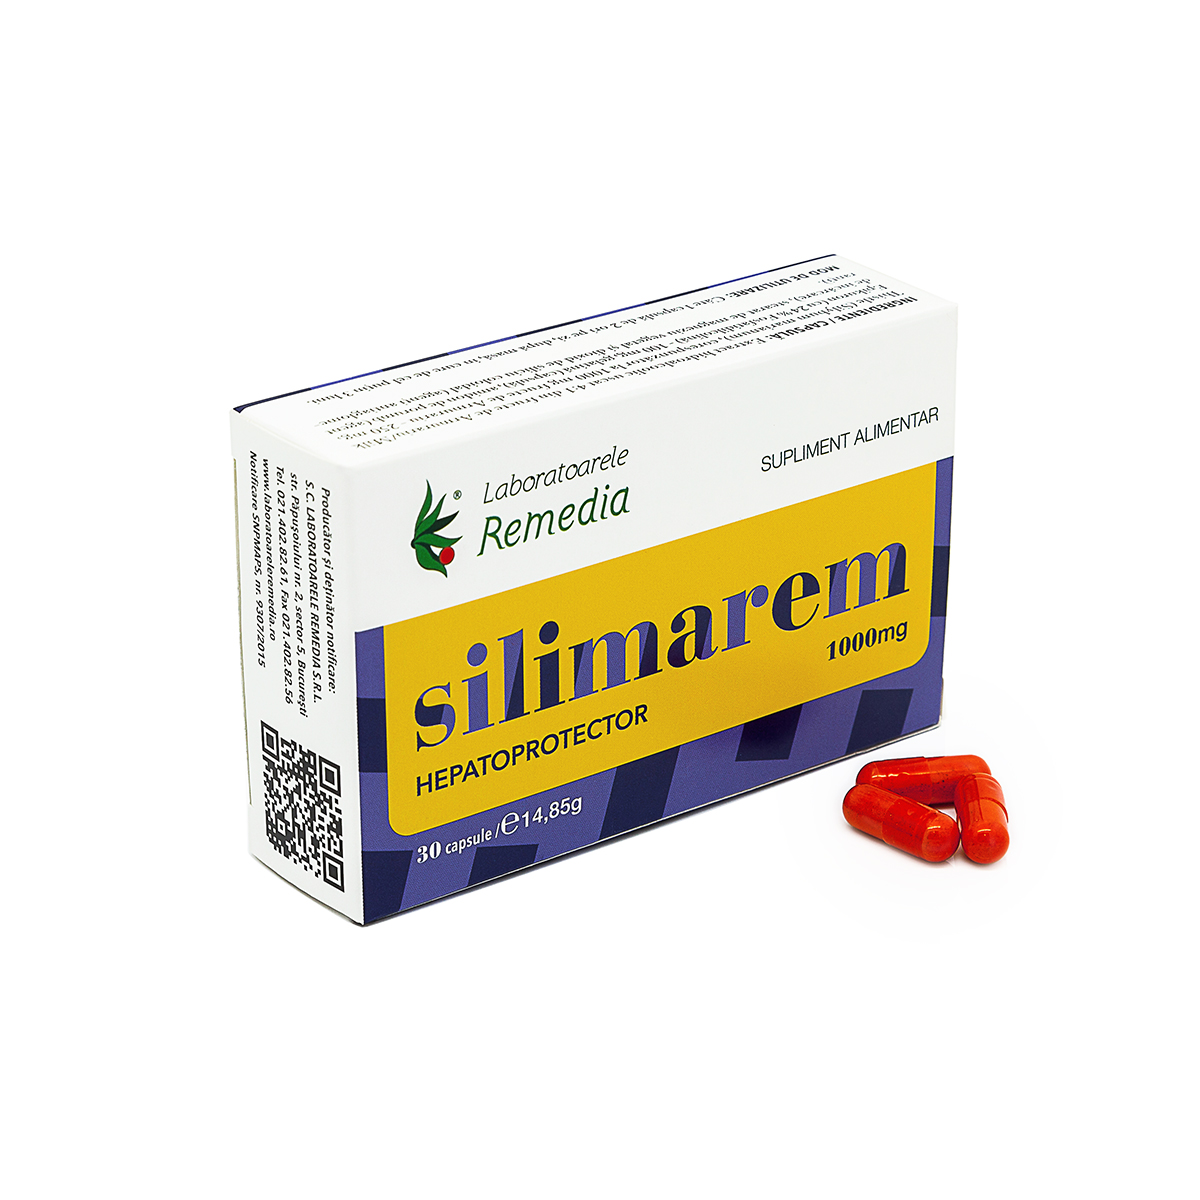 Silimarem Hepatoprotector 1000 mg, 30 capsule, Remedia